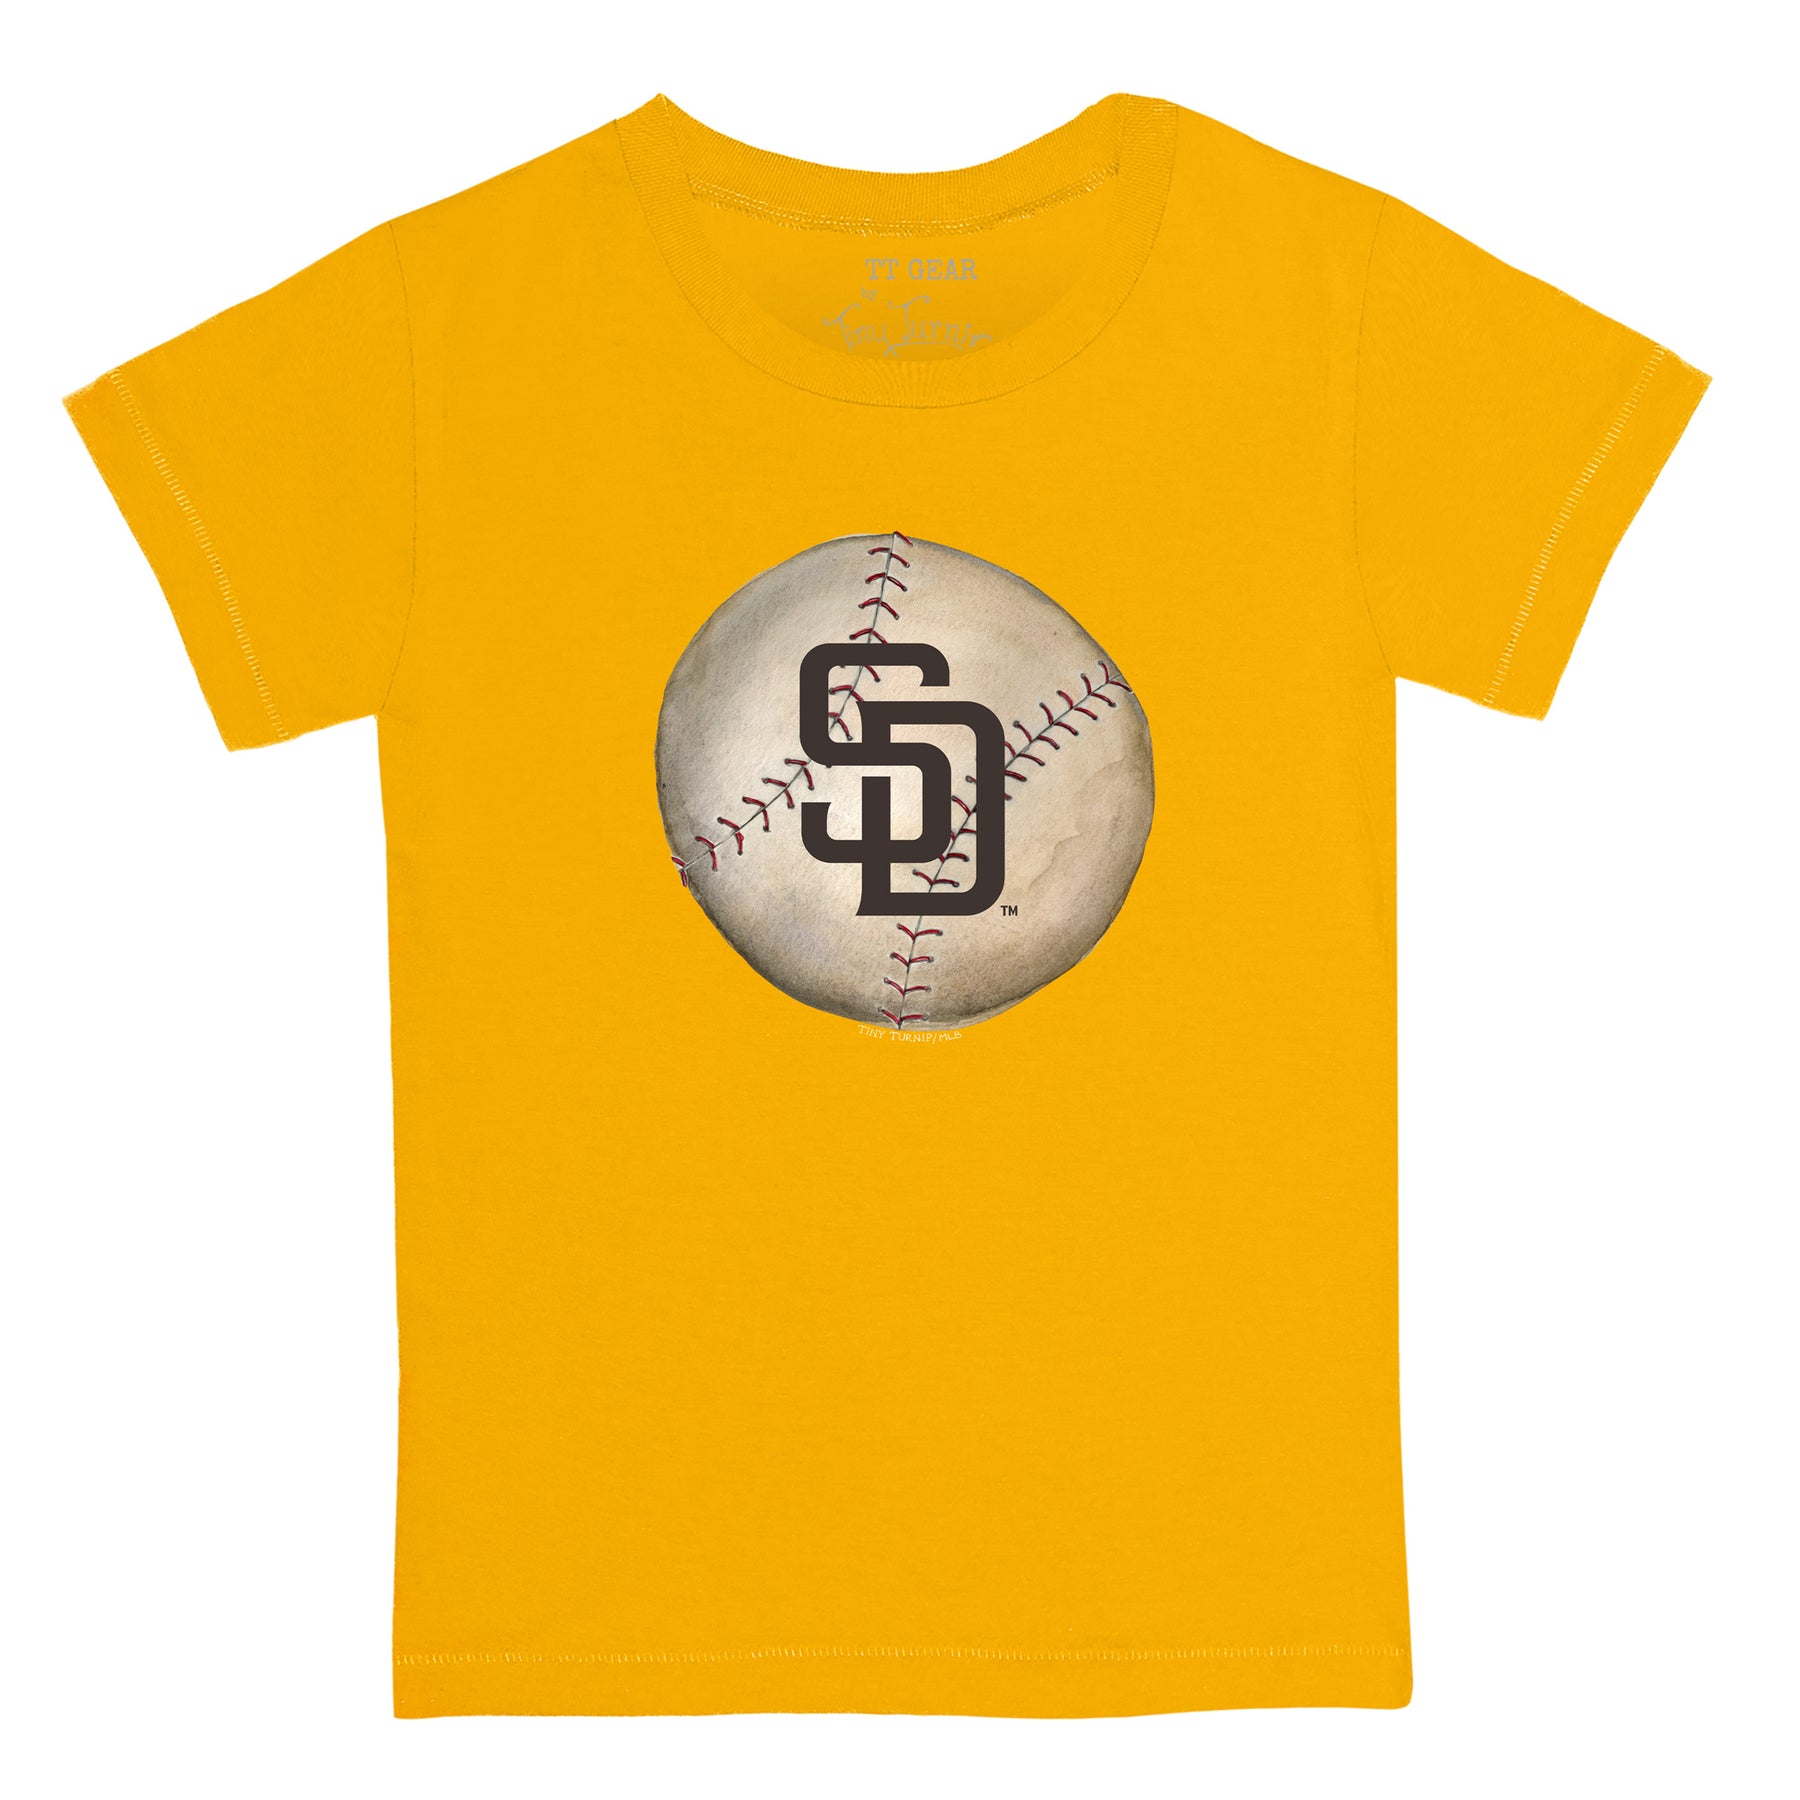 San Diego Padres Youth Size Jerseys & Kids Gear